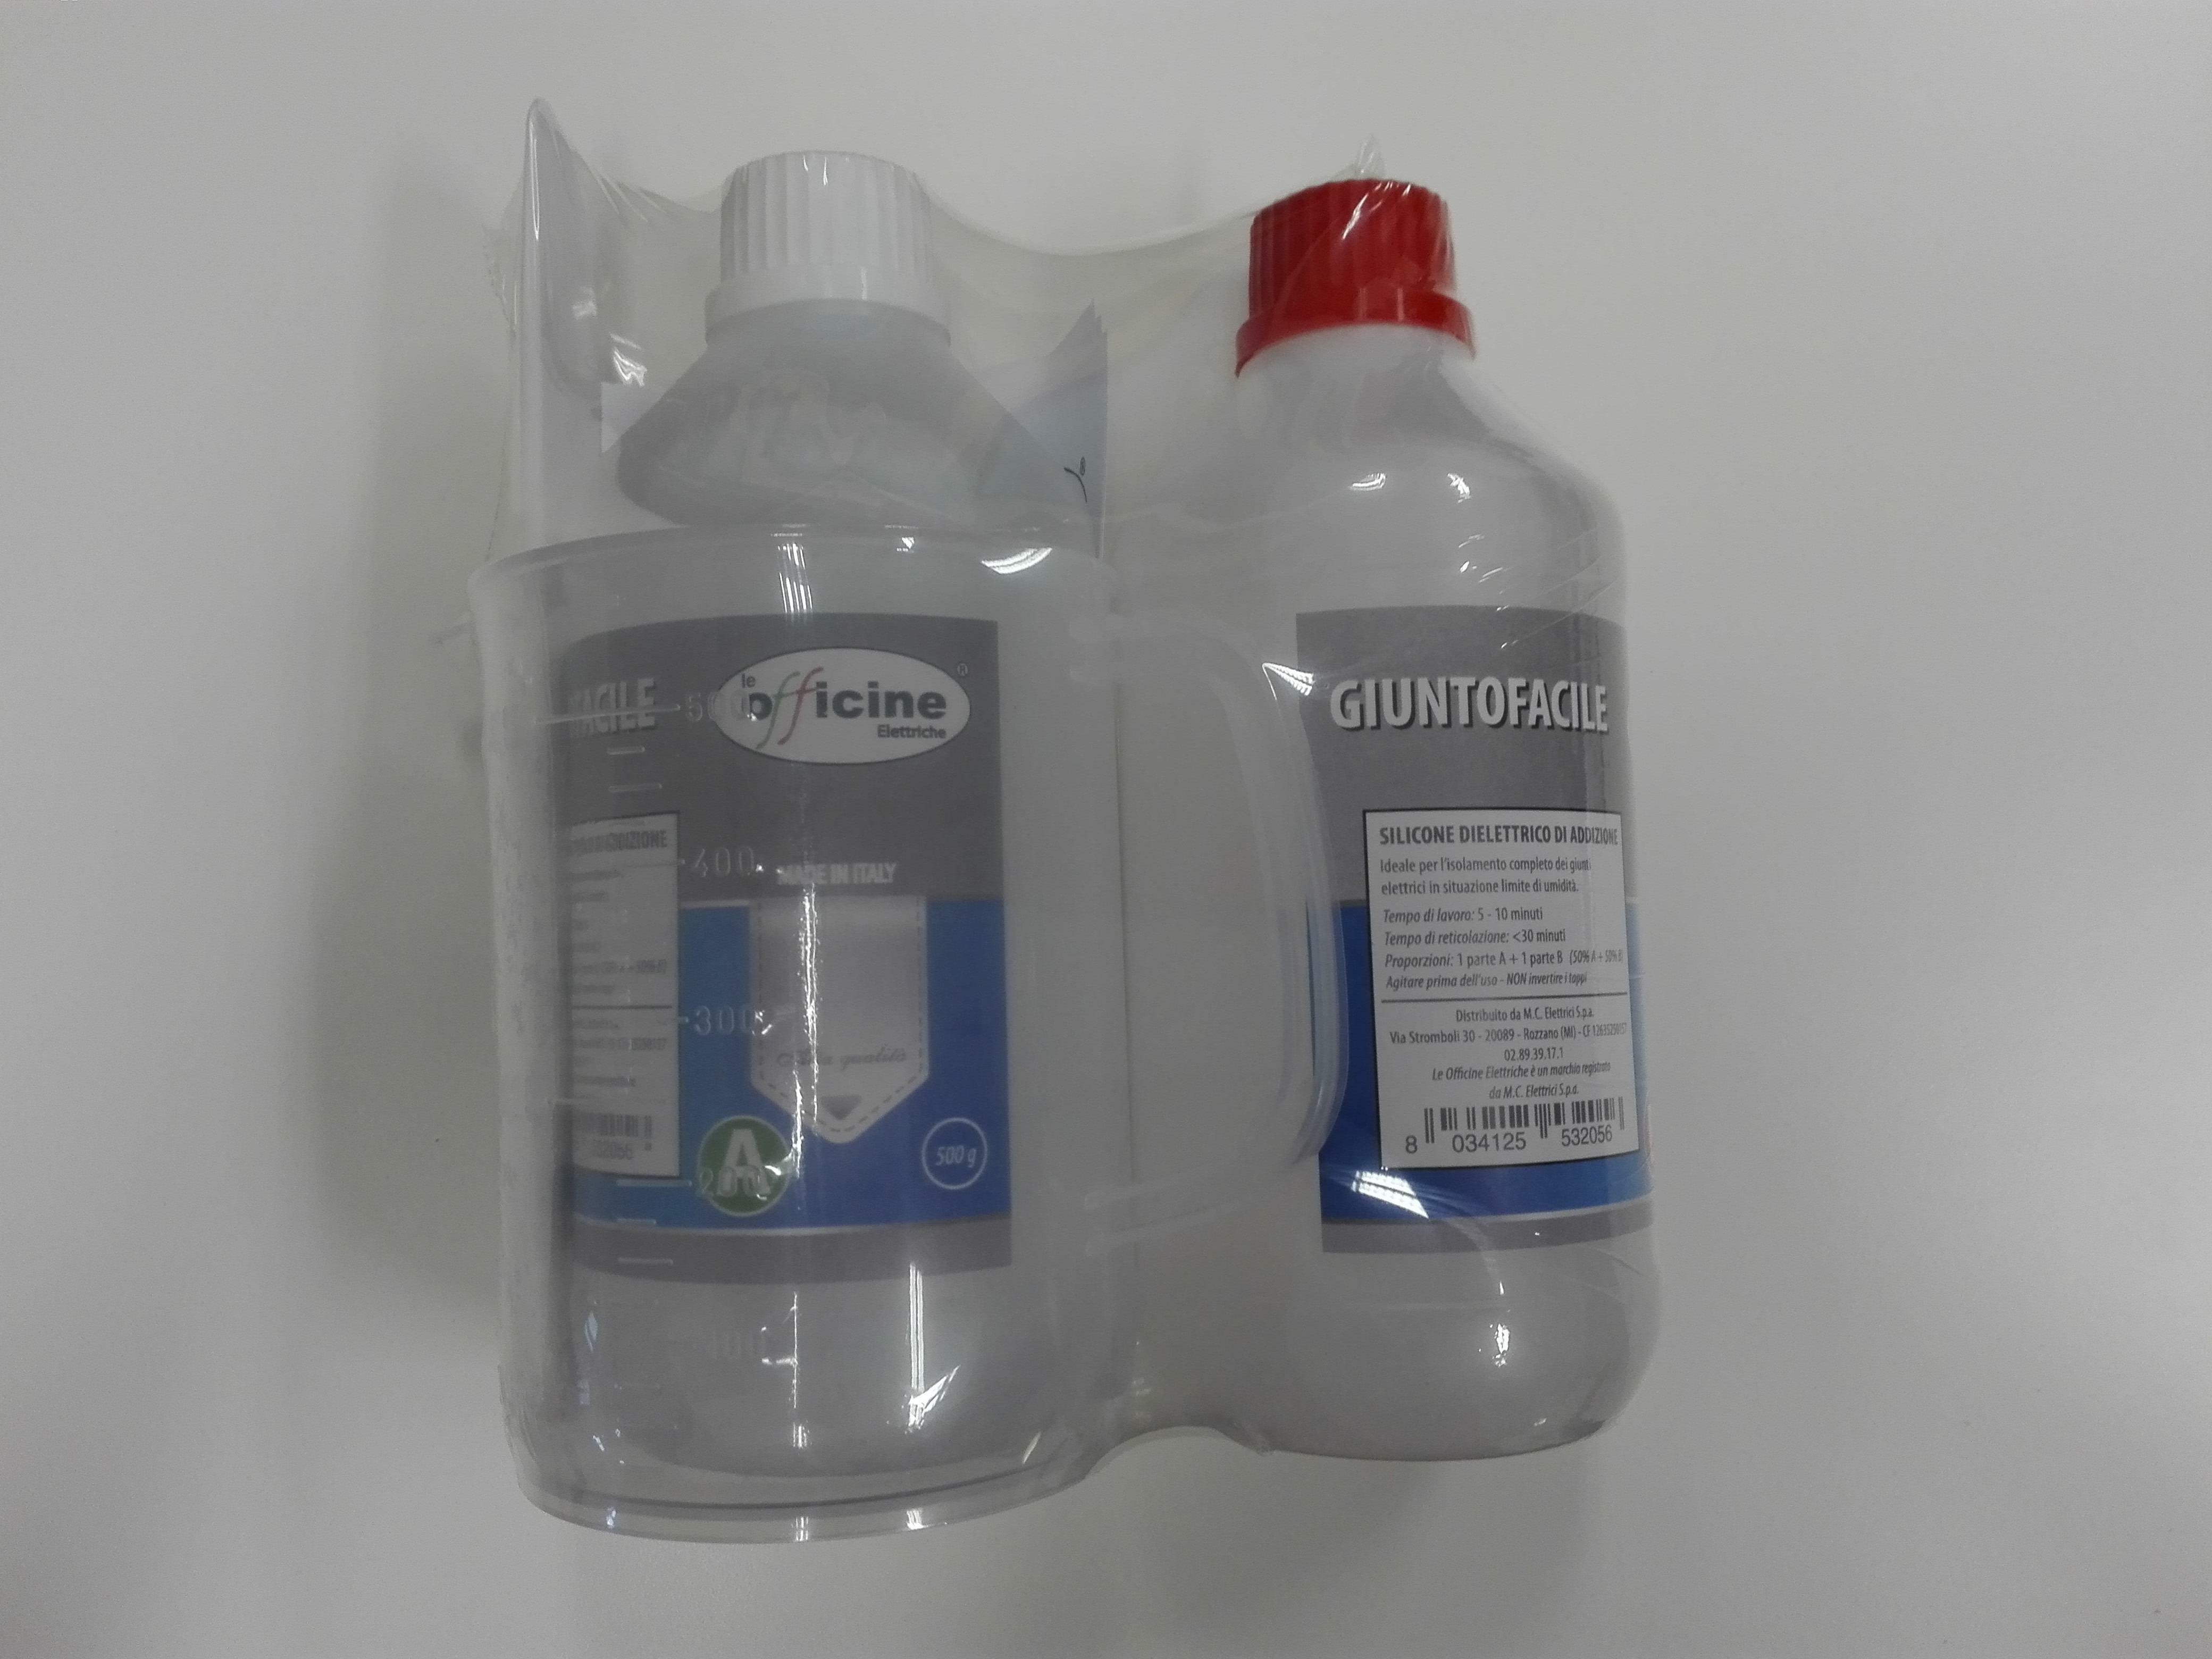 le officine le officine gel bicomponente 500g+500g+bec giuntofacile